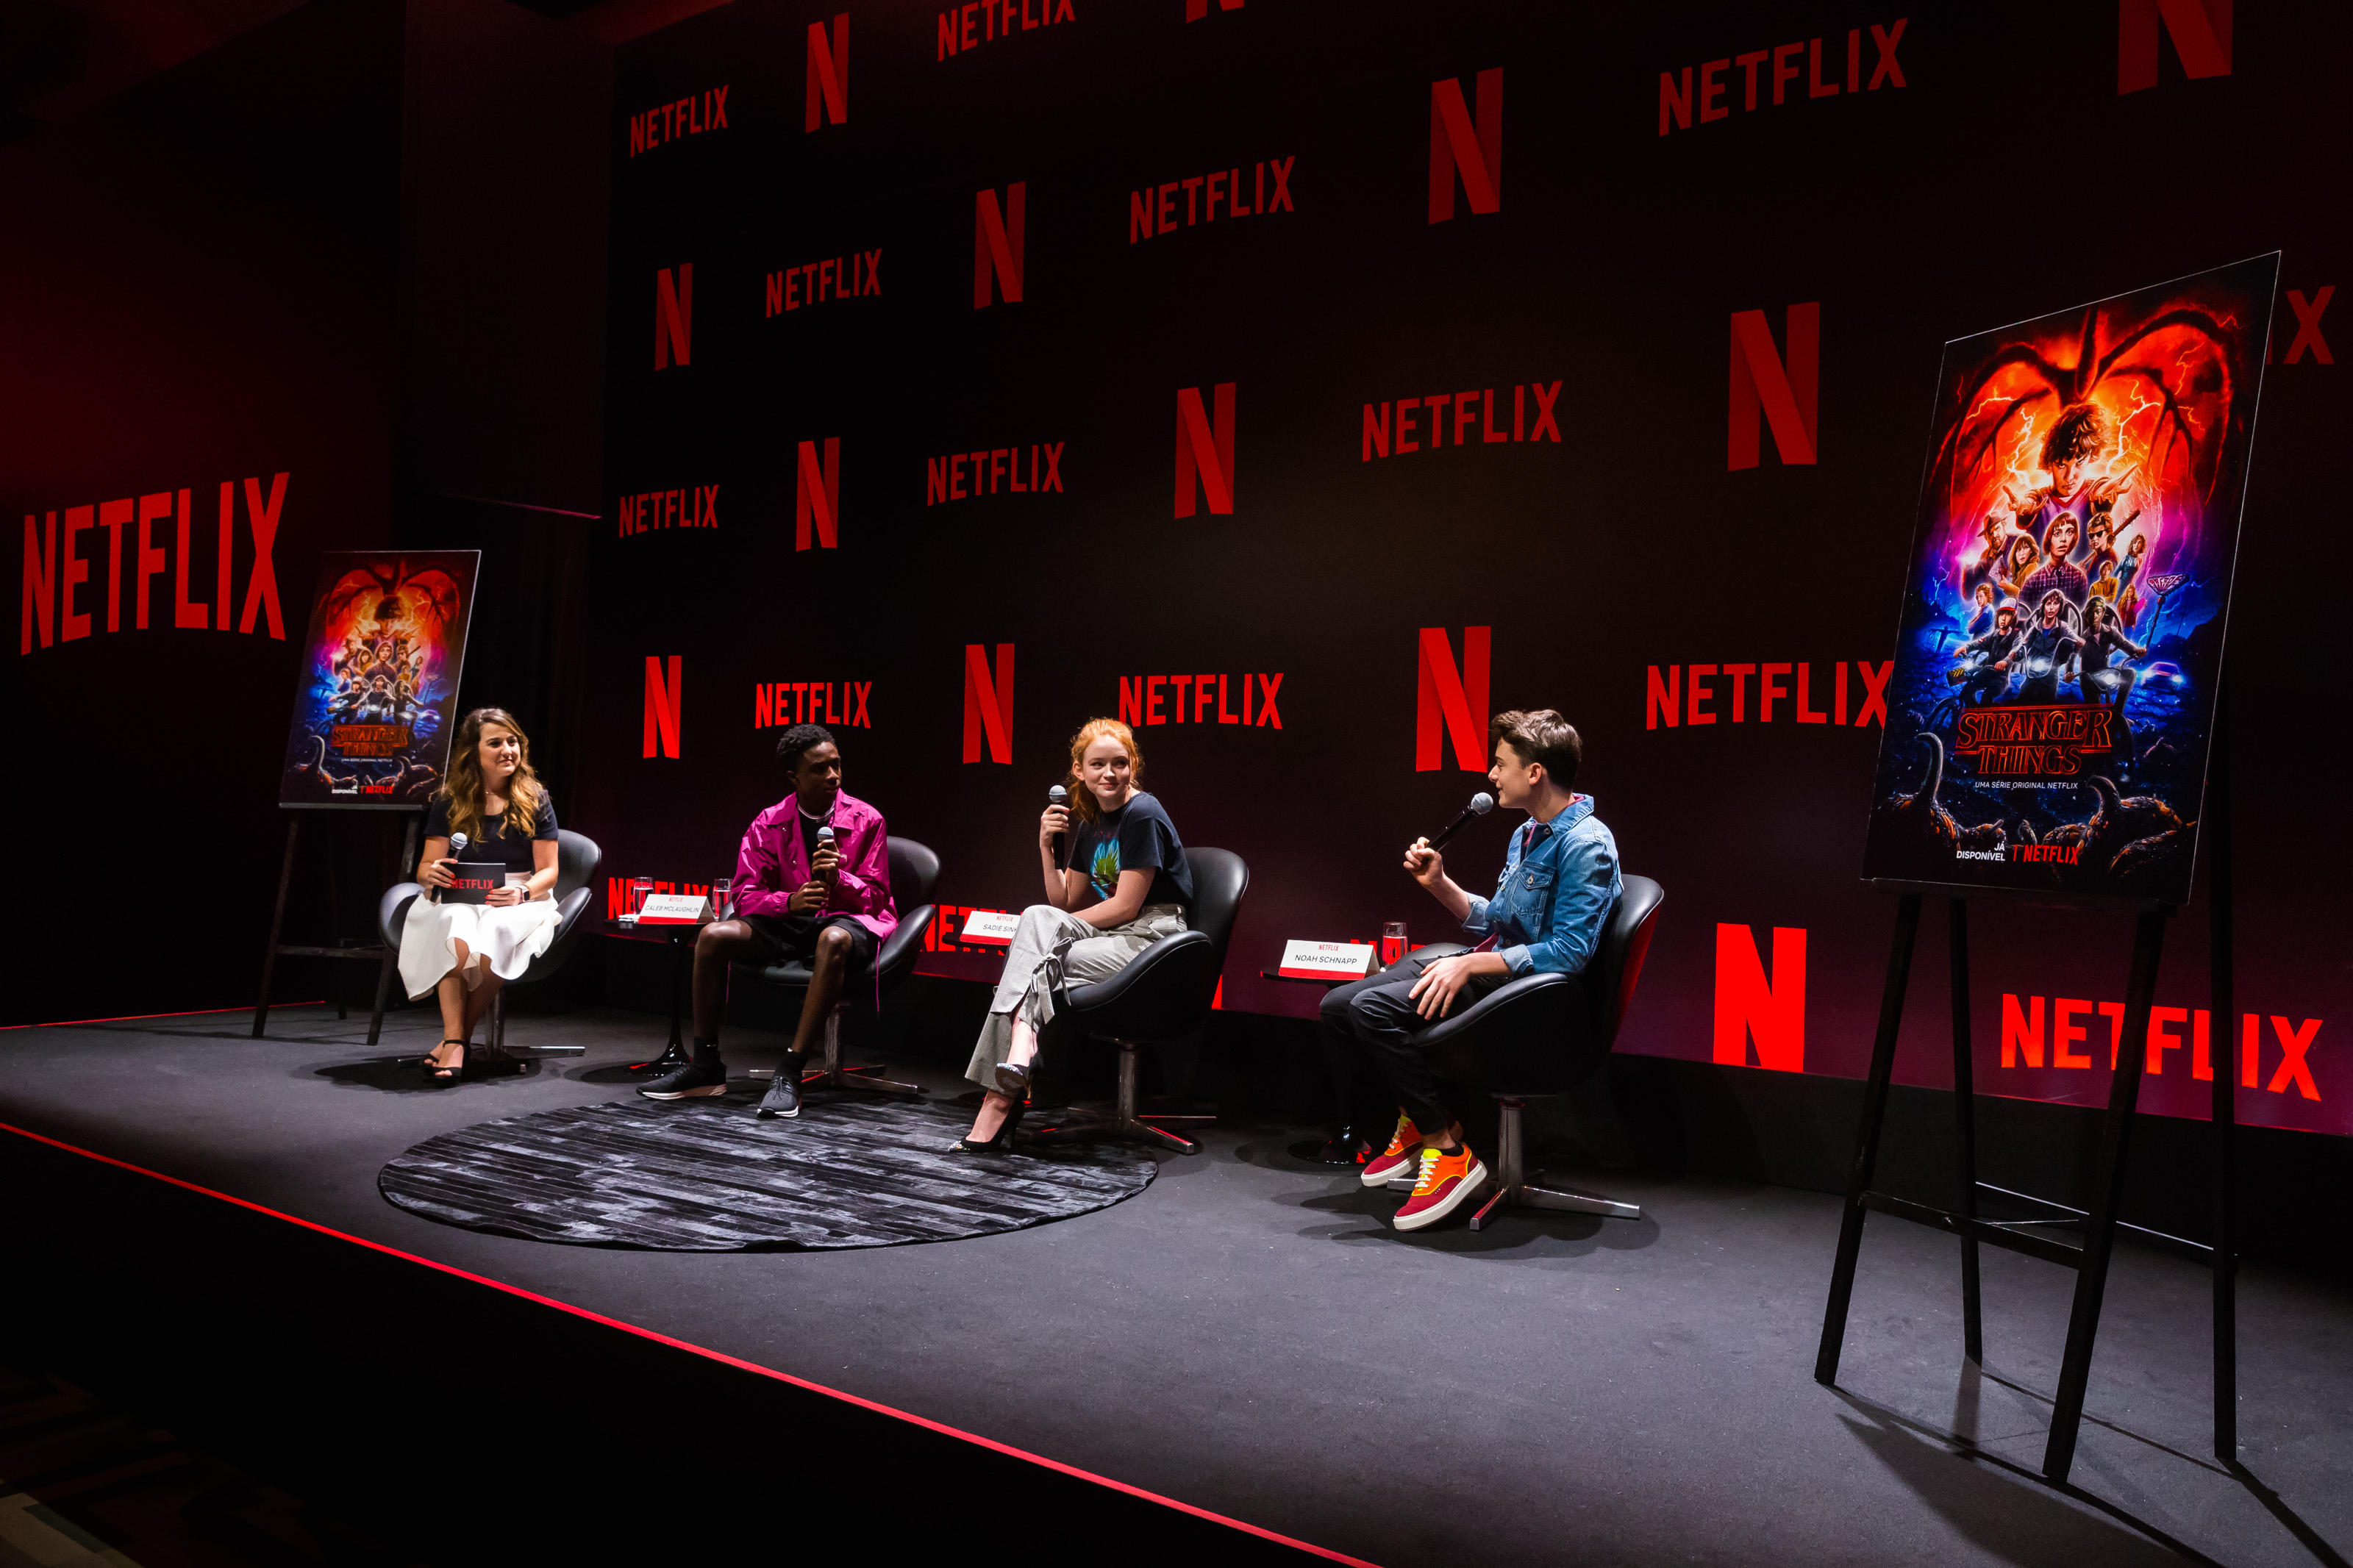 Netflix Original Series "Stranger Things" Press Conference